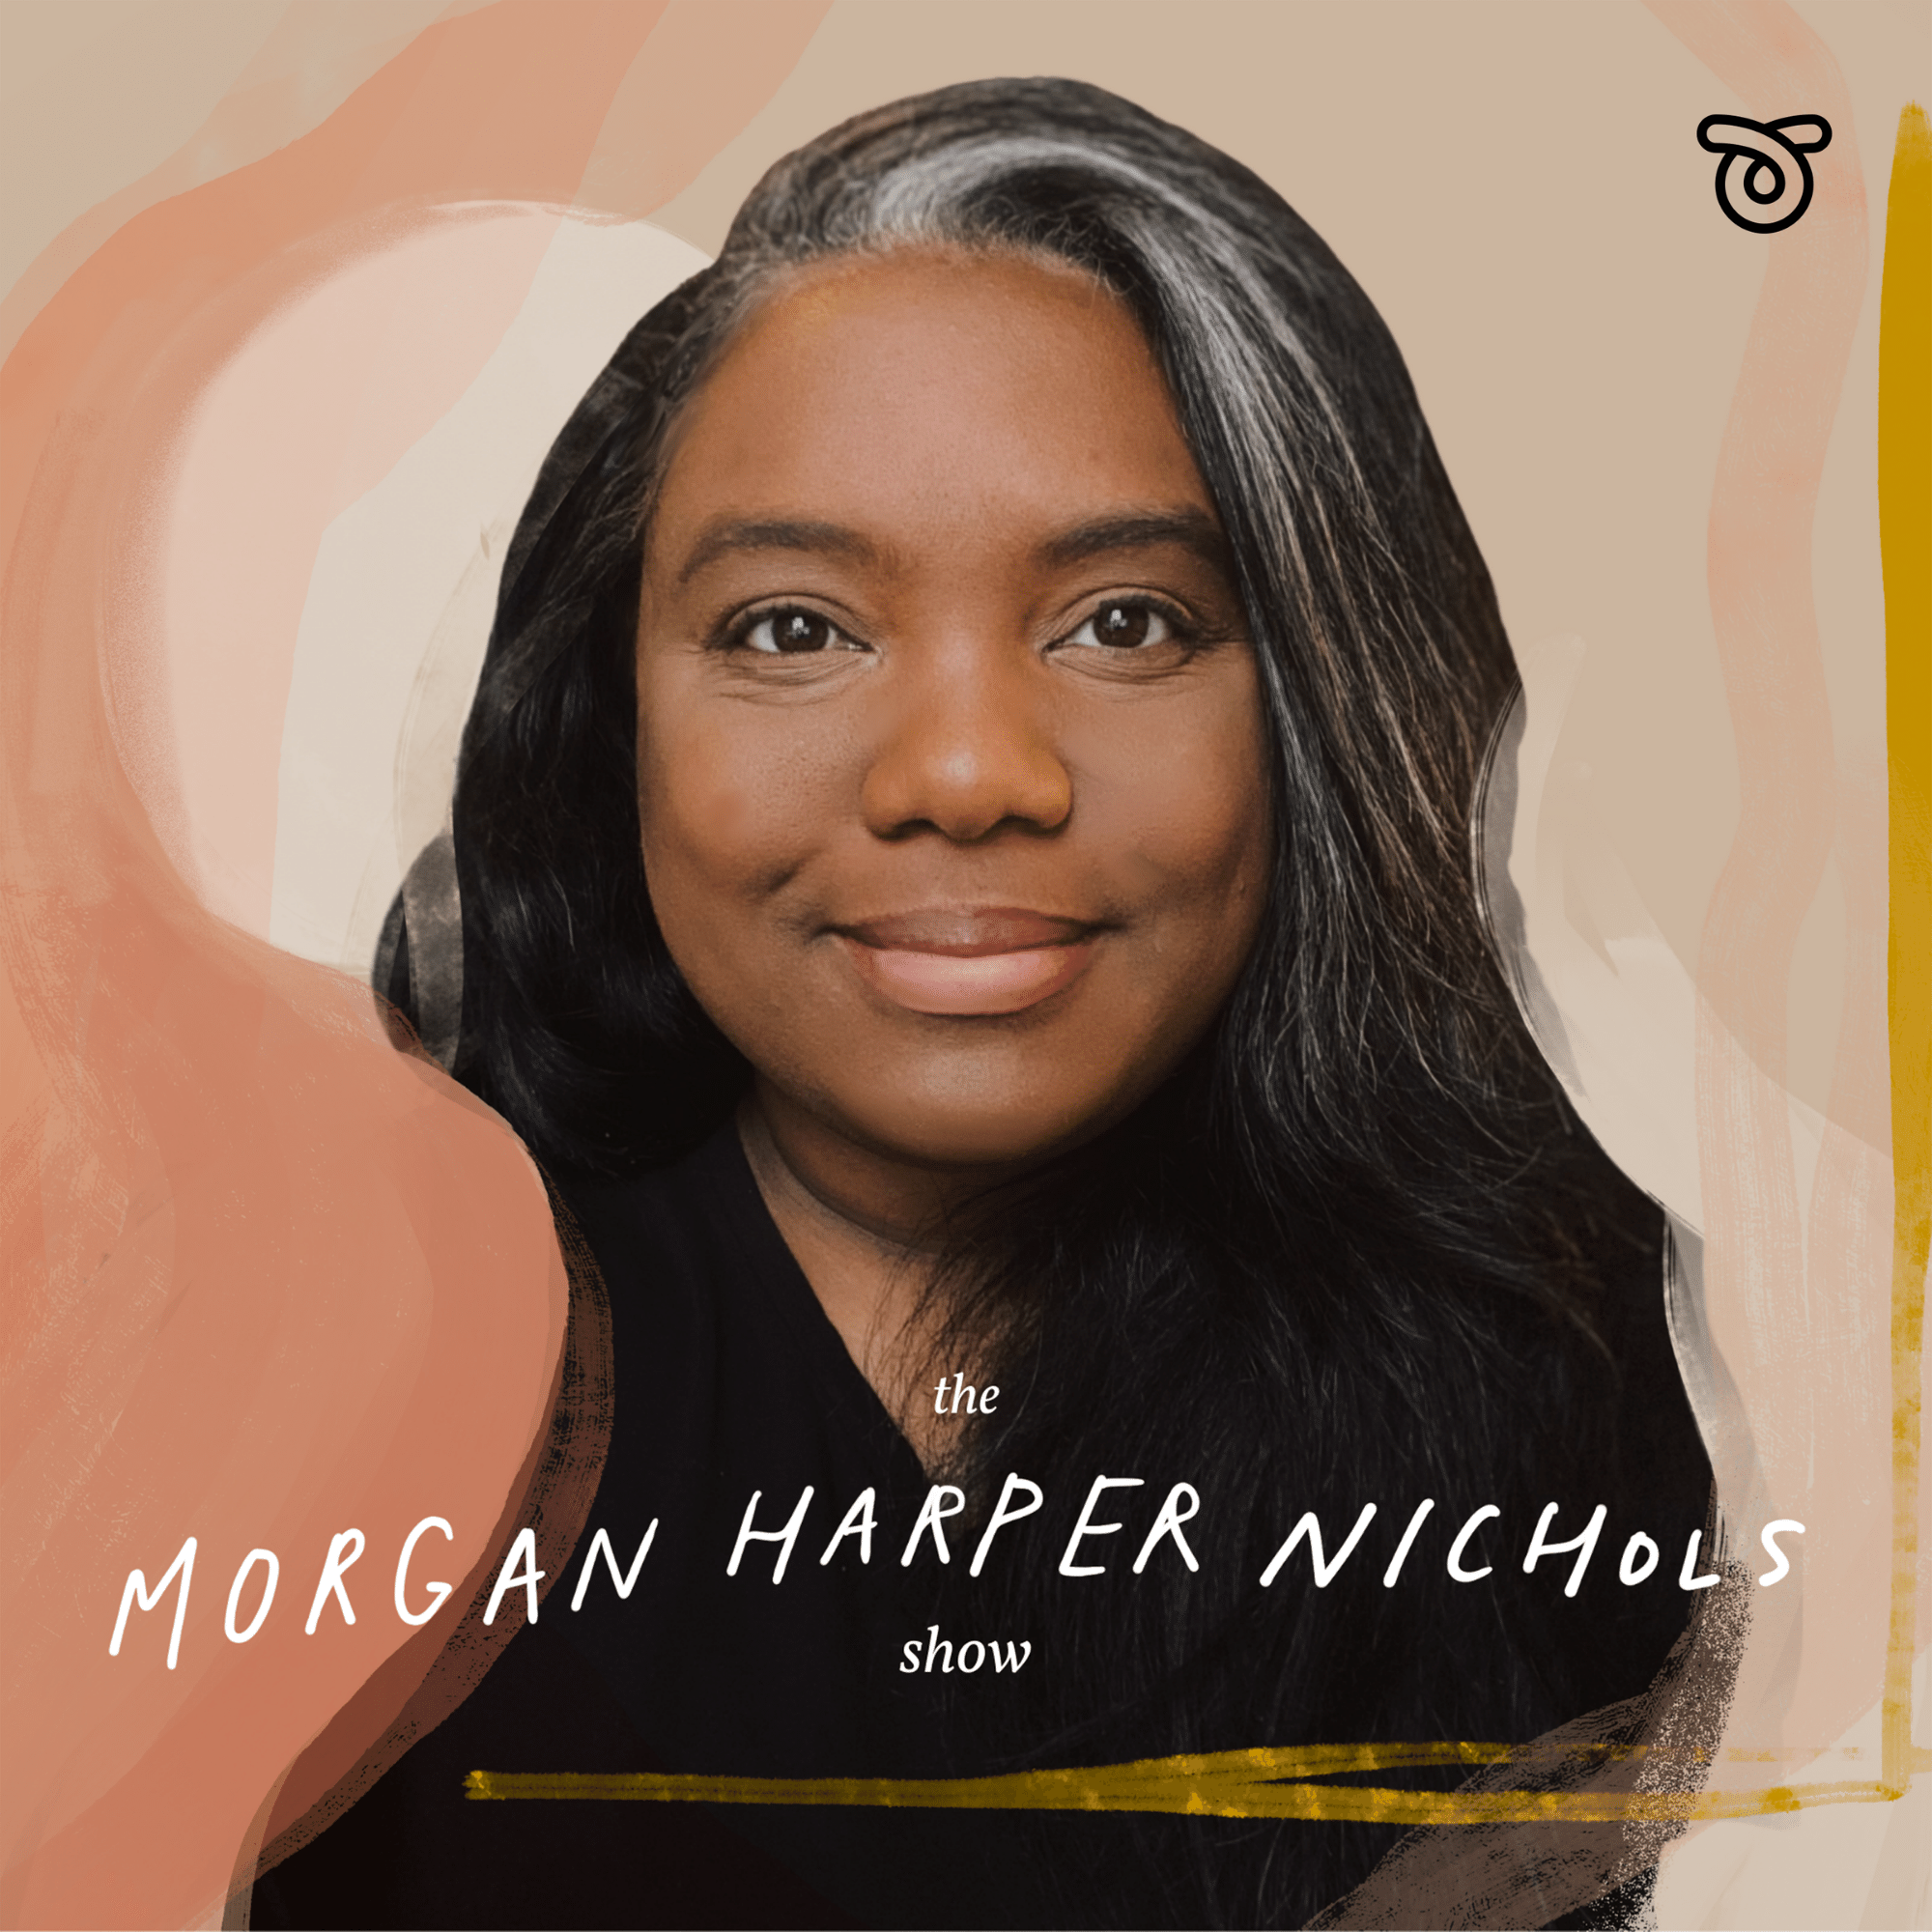 Artwork for podcast The Morgan Harper Nichols Show